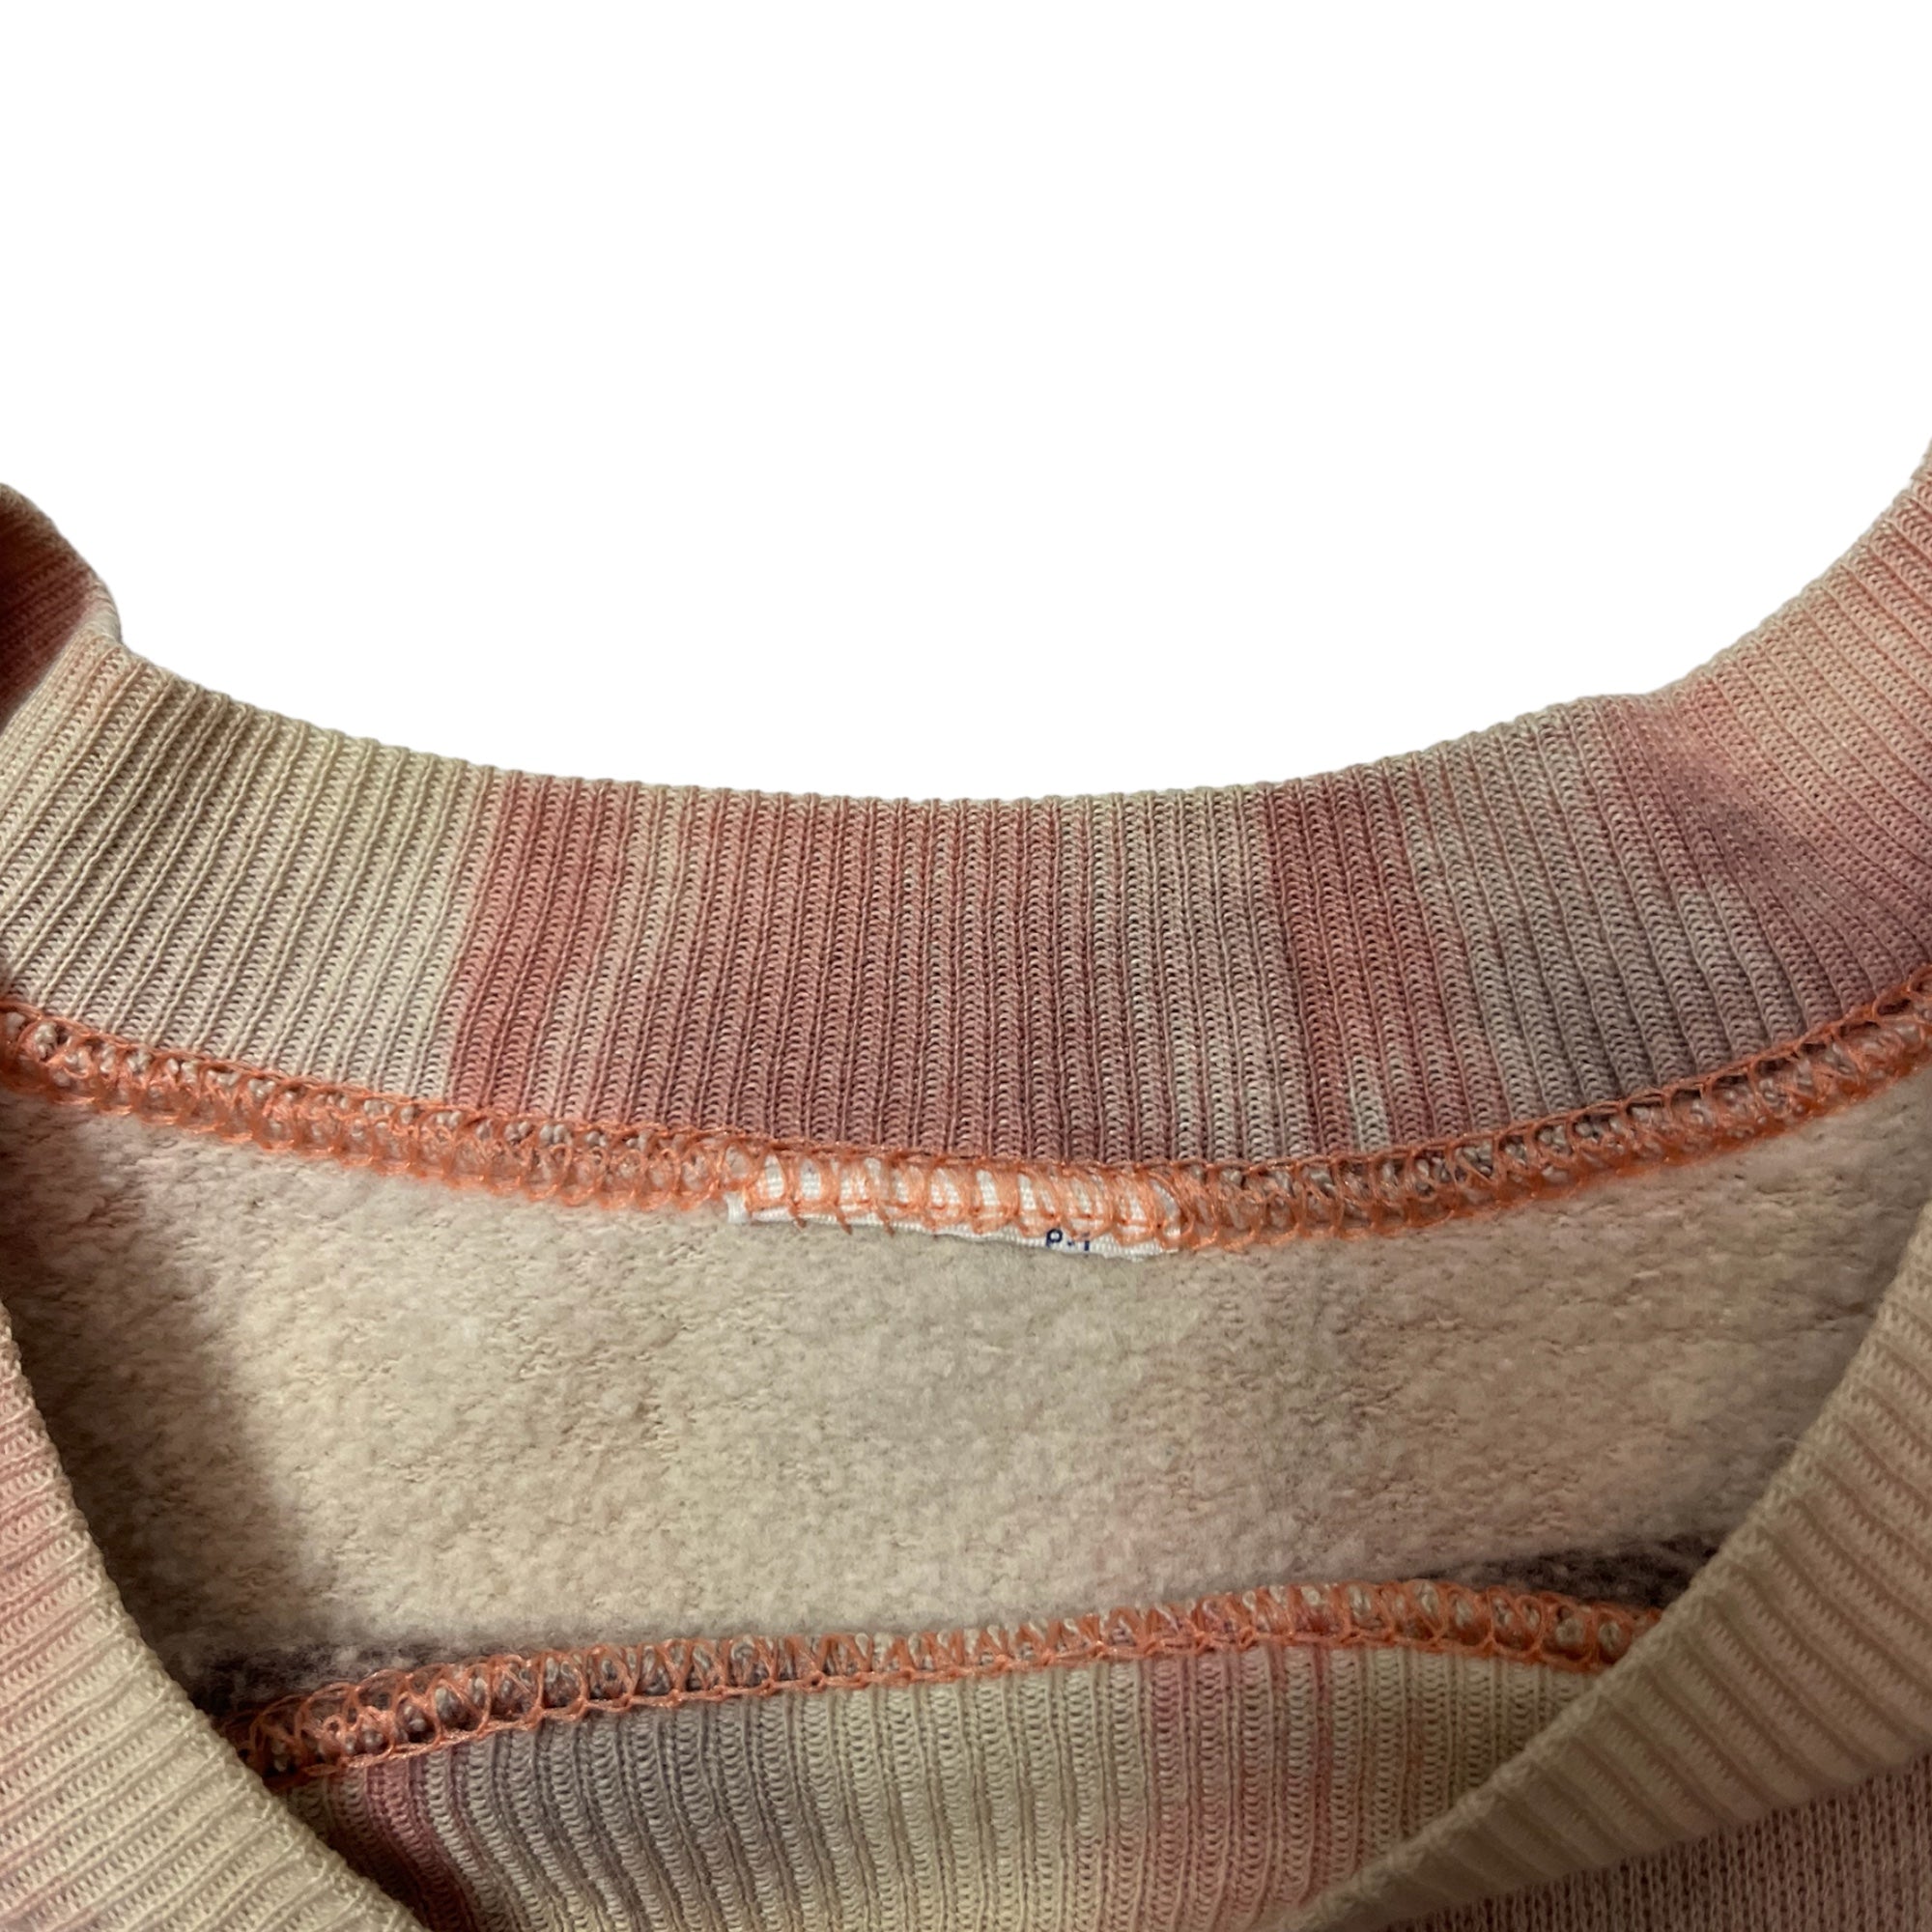 1980s Distressed Tie-Dye Raglan Sweatshirt - Pink/Discolored - L/XL